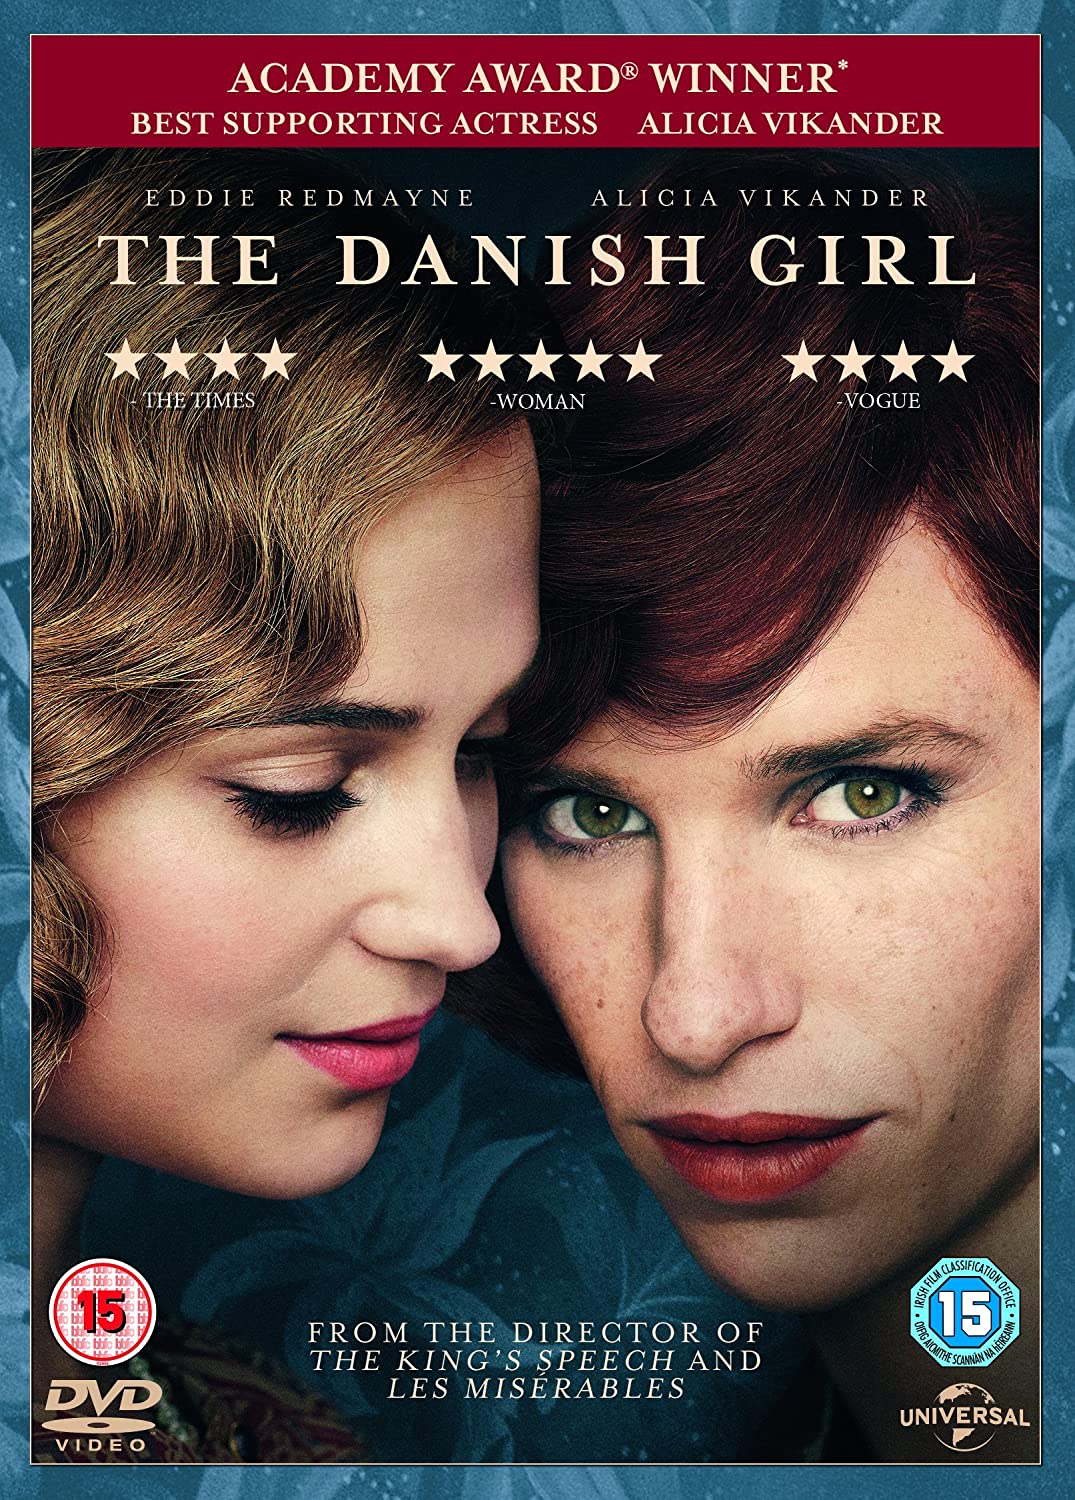 The Danish Girl [2015] - Drama/Romance [DVD]